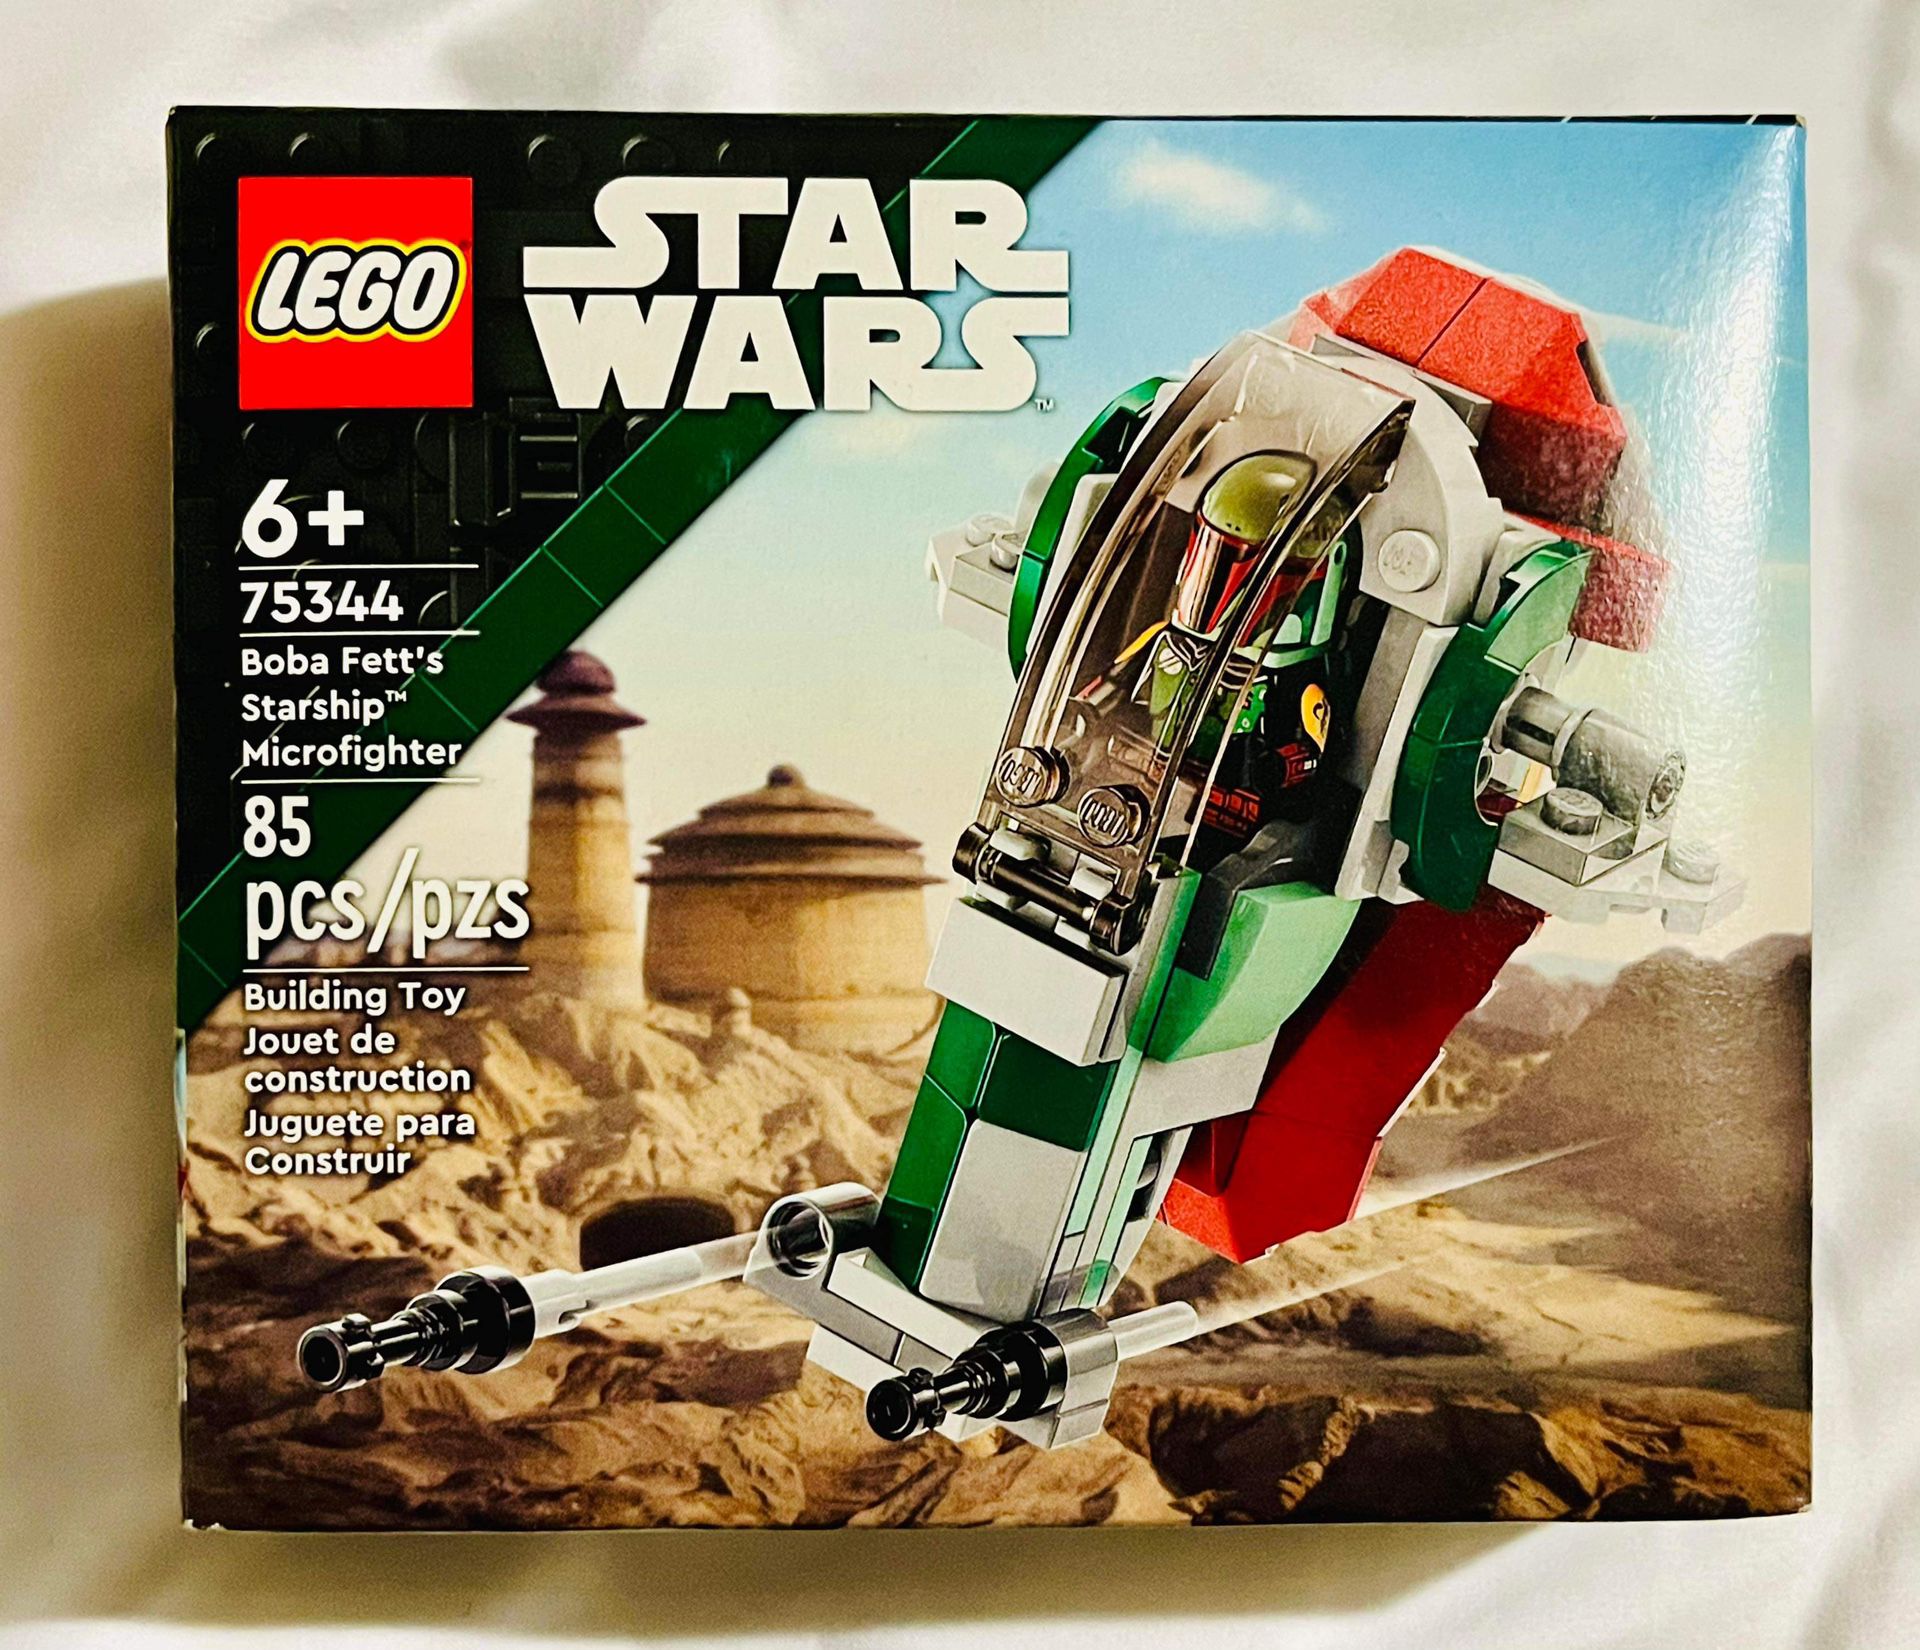 NEW LEGO Star Wars (75344) Boba Fett's Starship Microfighter Building Toy Set